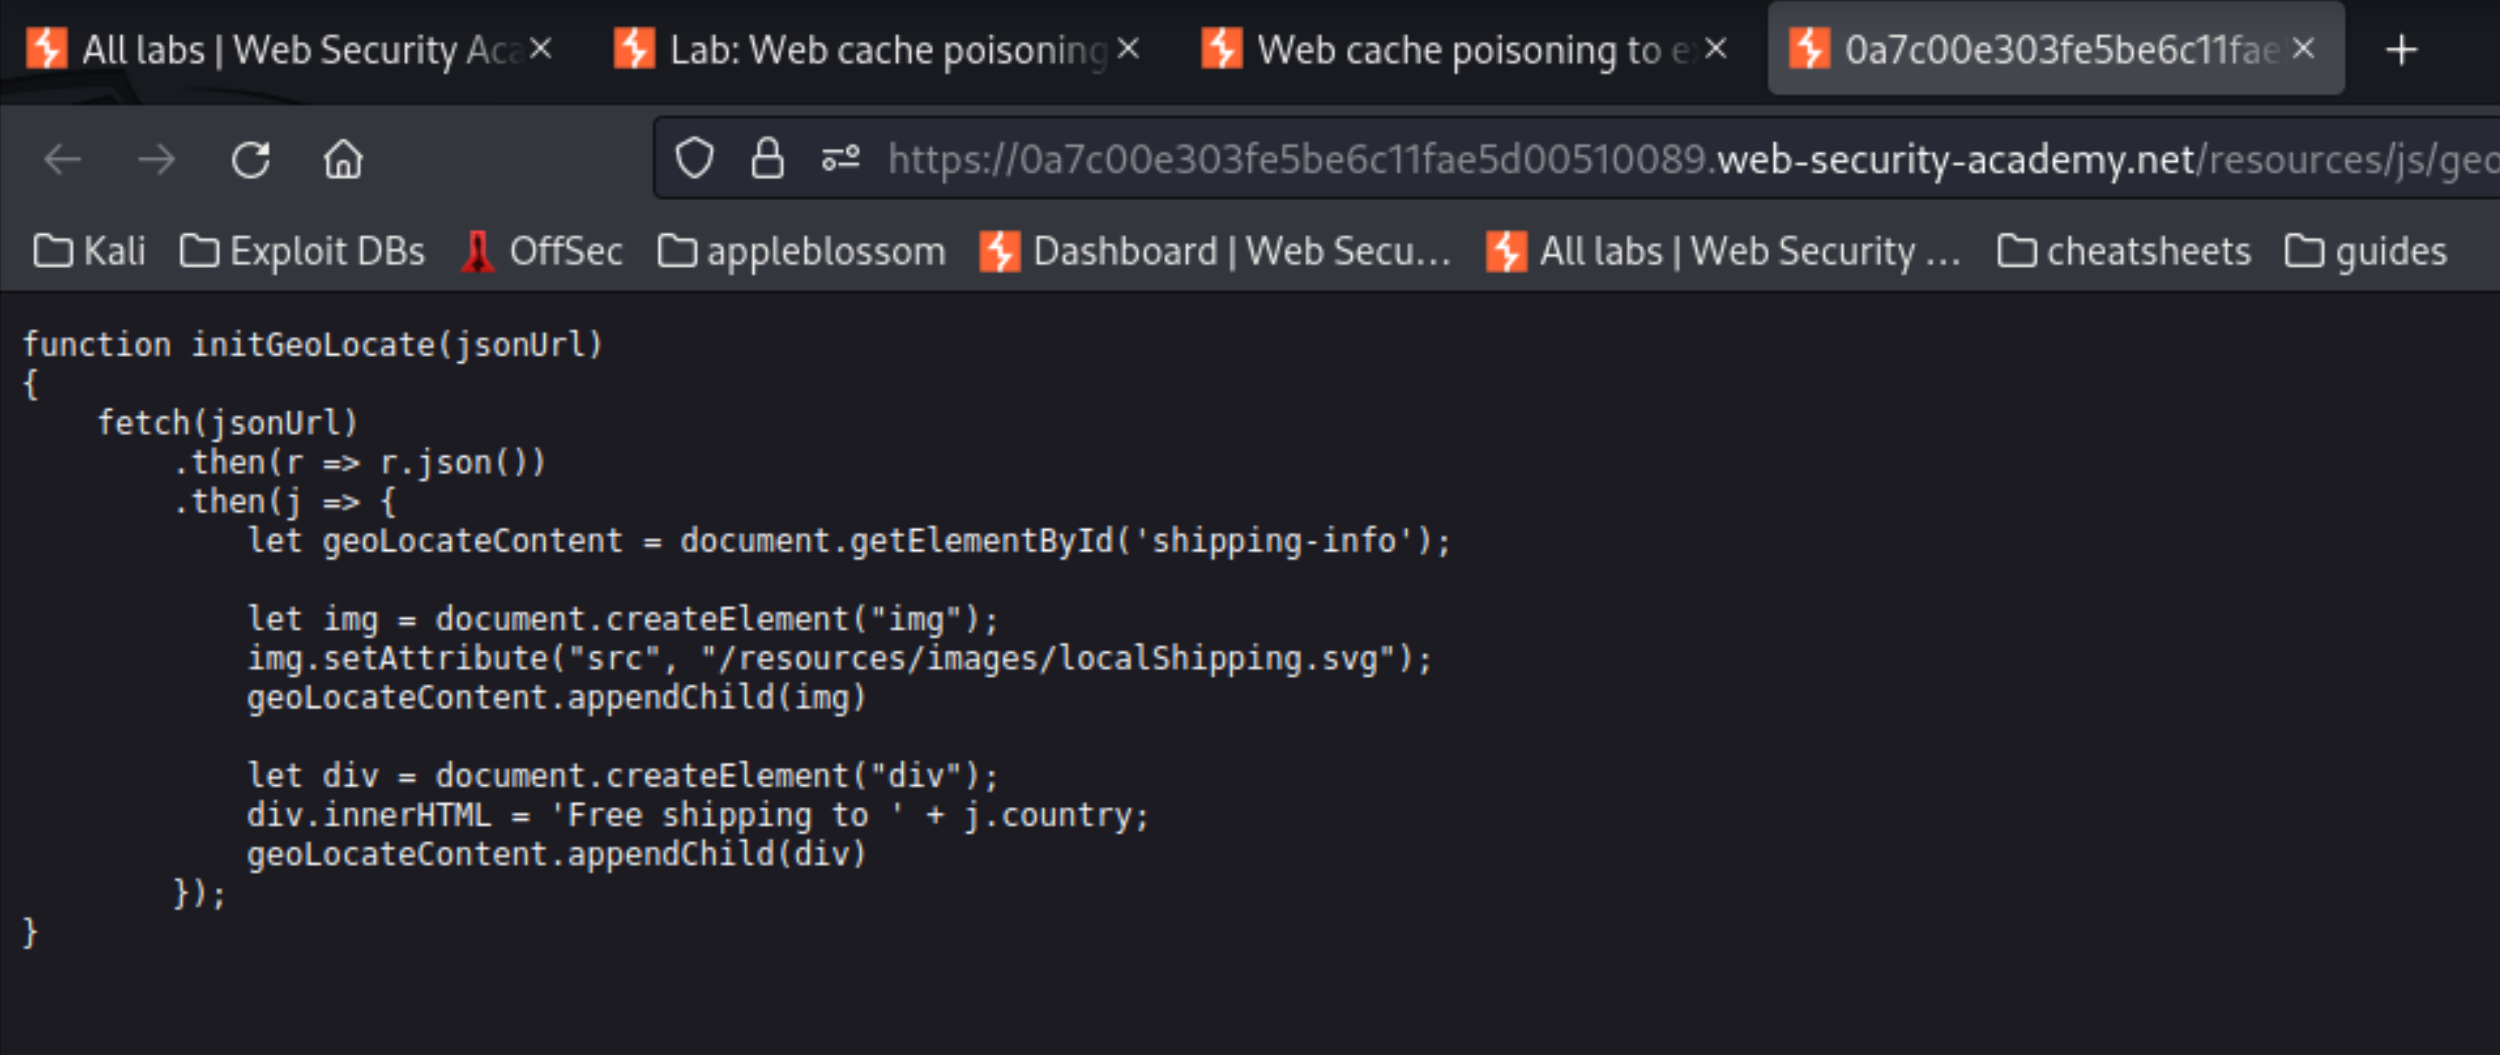 Web cache poisoning